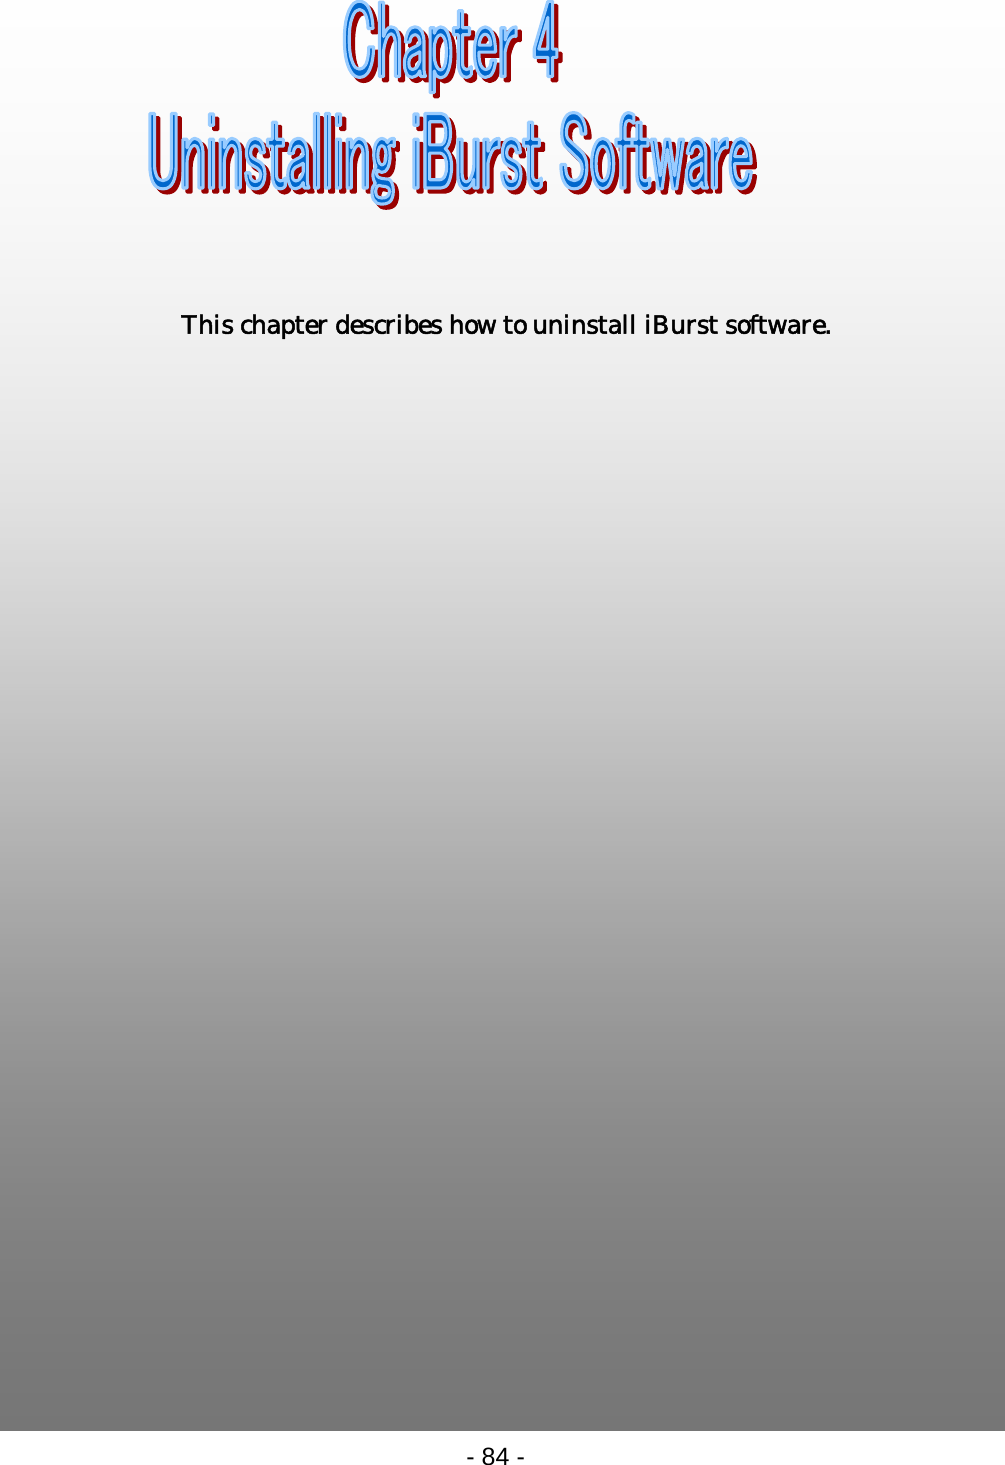 Chapter 4 Uninstalling iBurst Software                                     This chapter describes how to uninstall iBurst software. - 84 -  